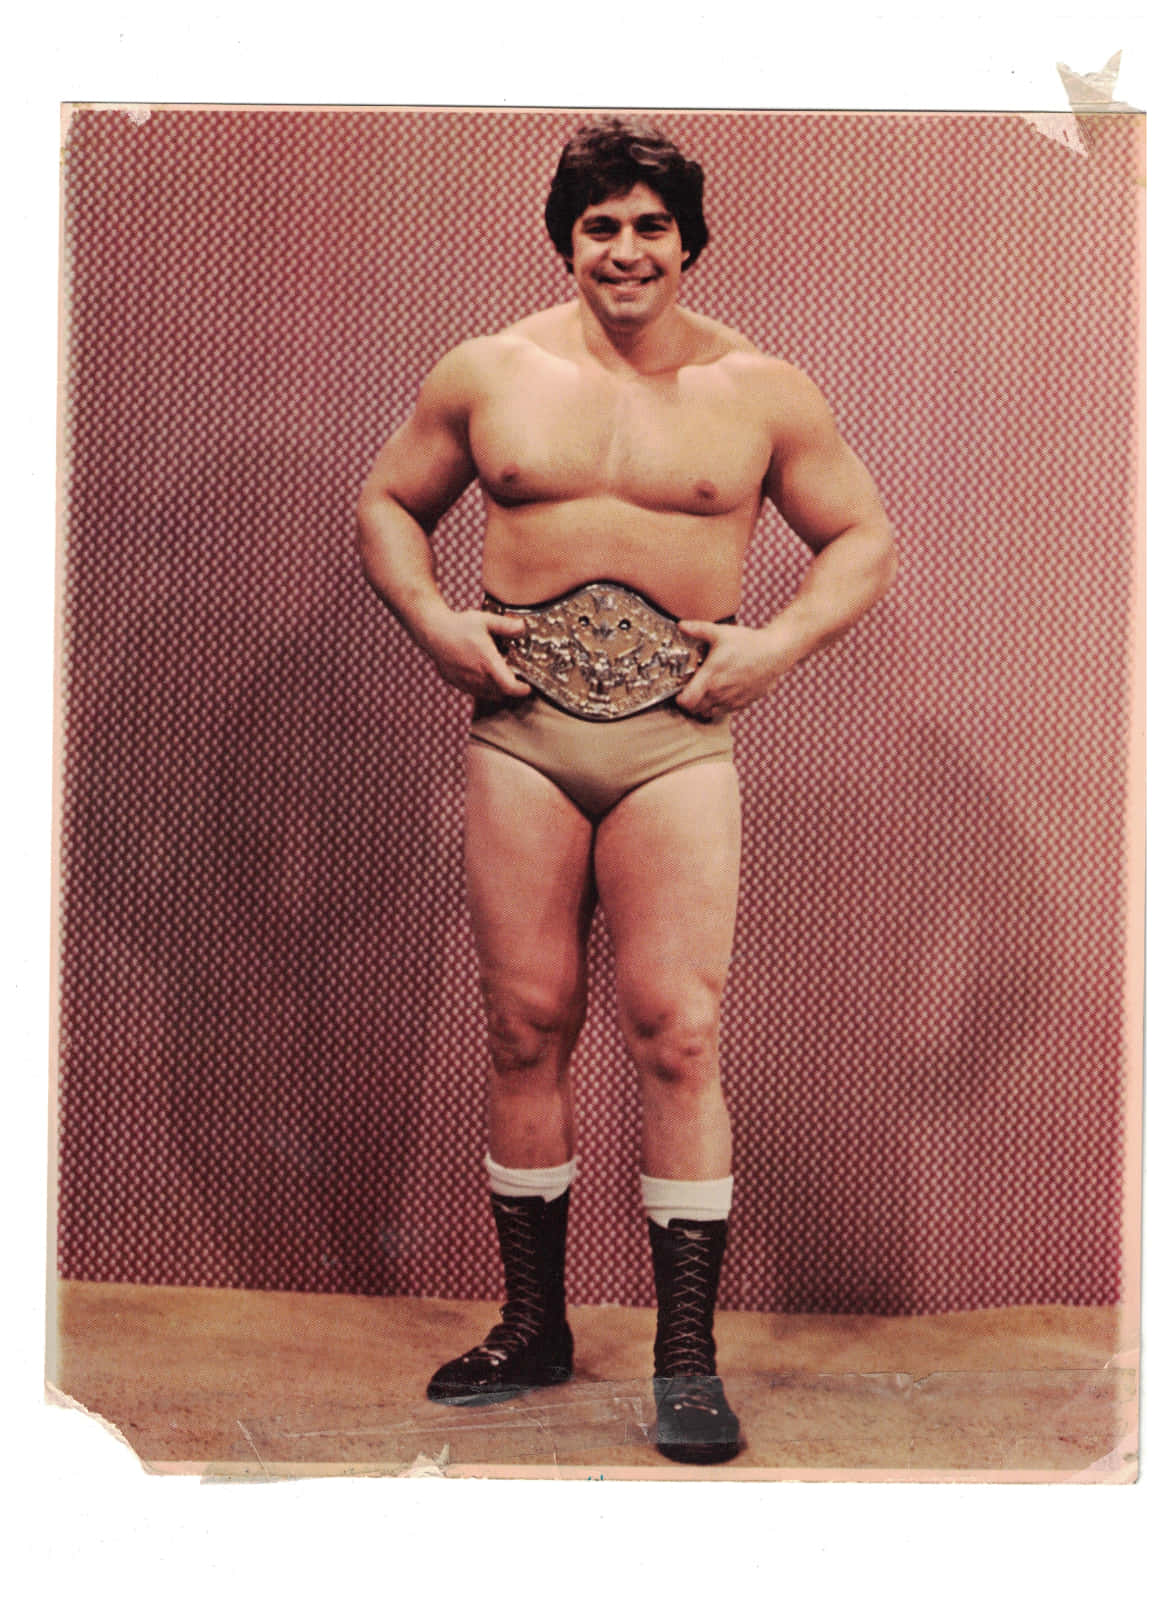 Dino Bravo Canadian Wrestling Champion Wallpaper